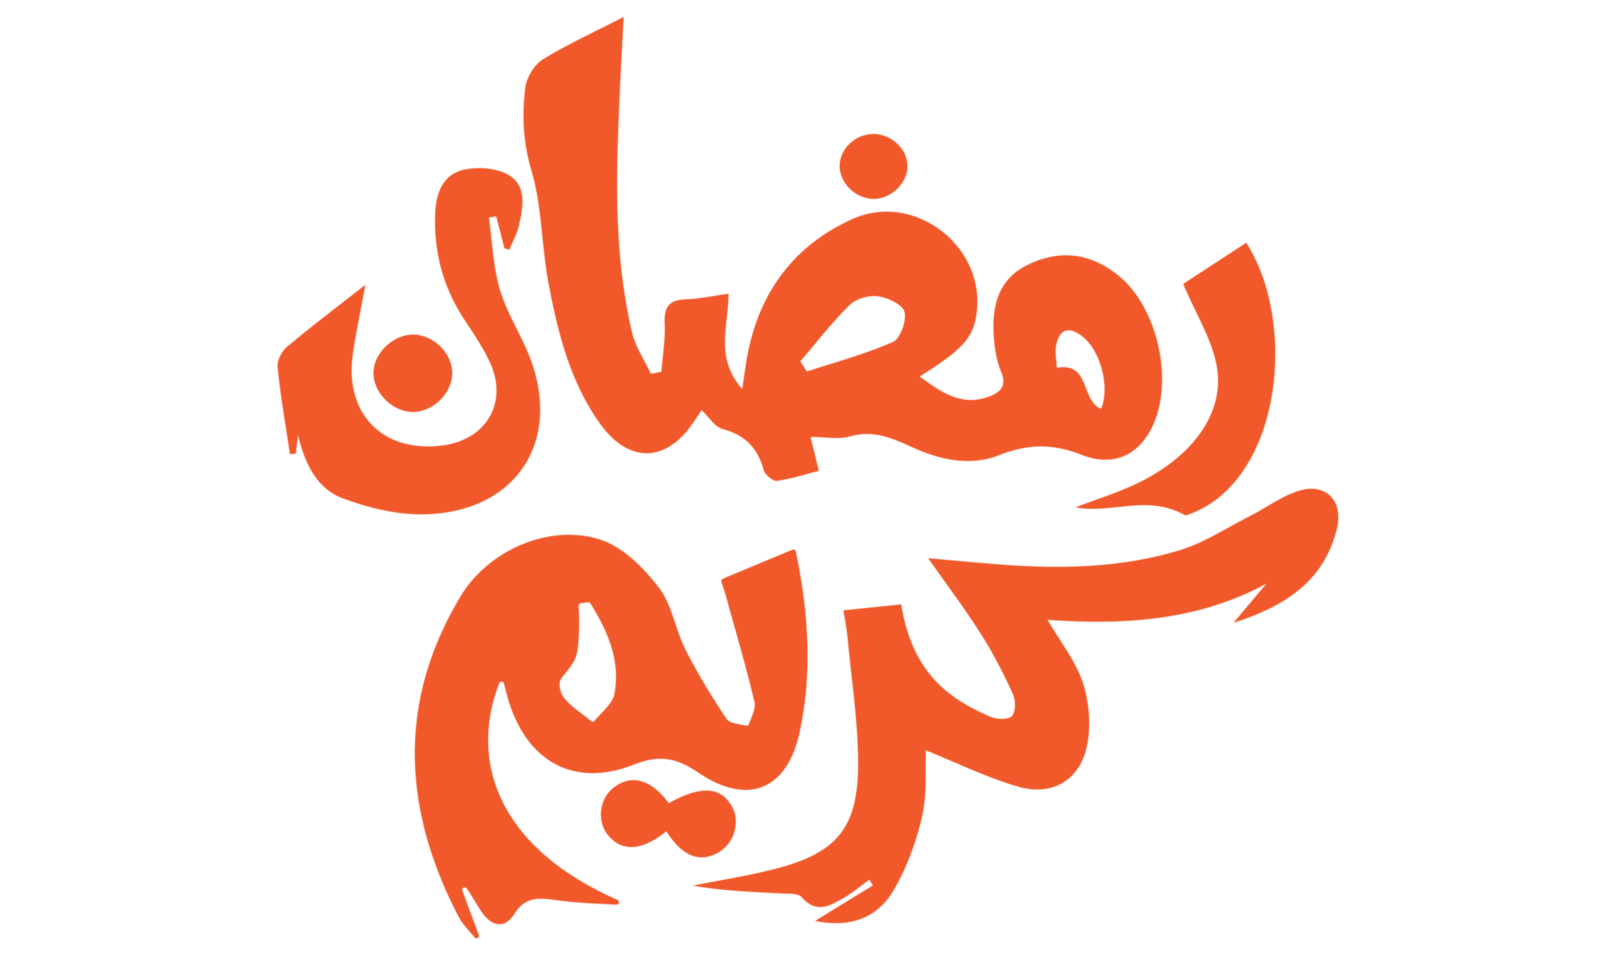 Ramadan Kareem - Ramzan Calligraphy illustration on transparent background png